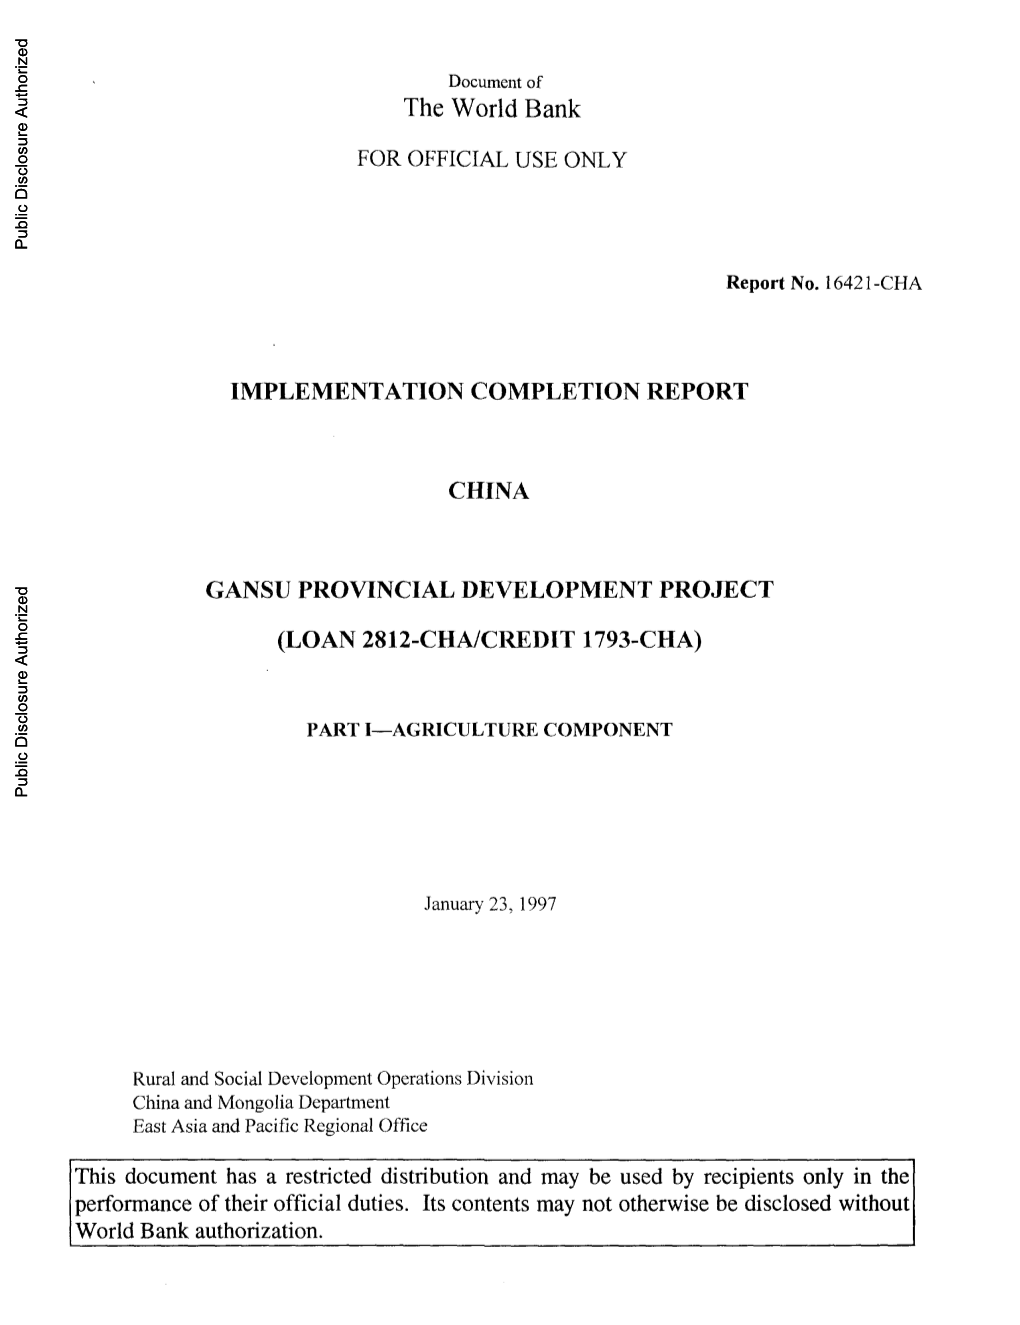 Implementation Completion Report China Gansu Provincial Development Project